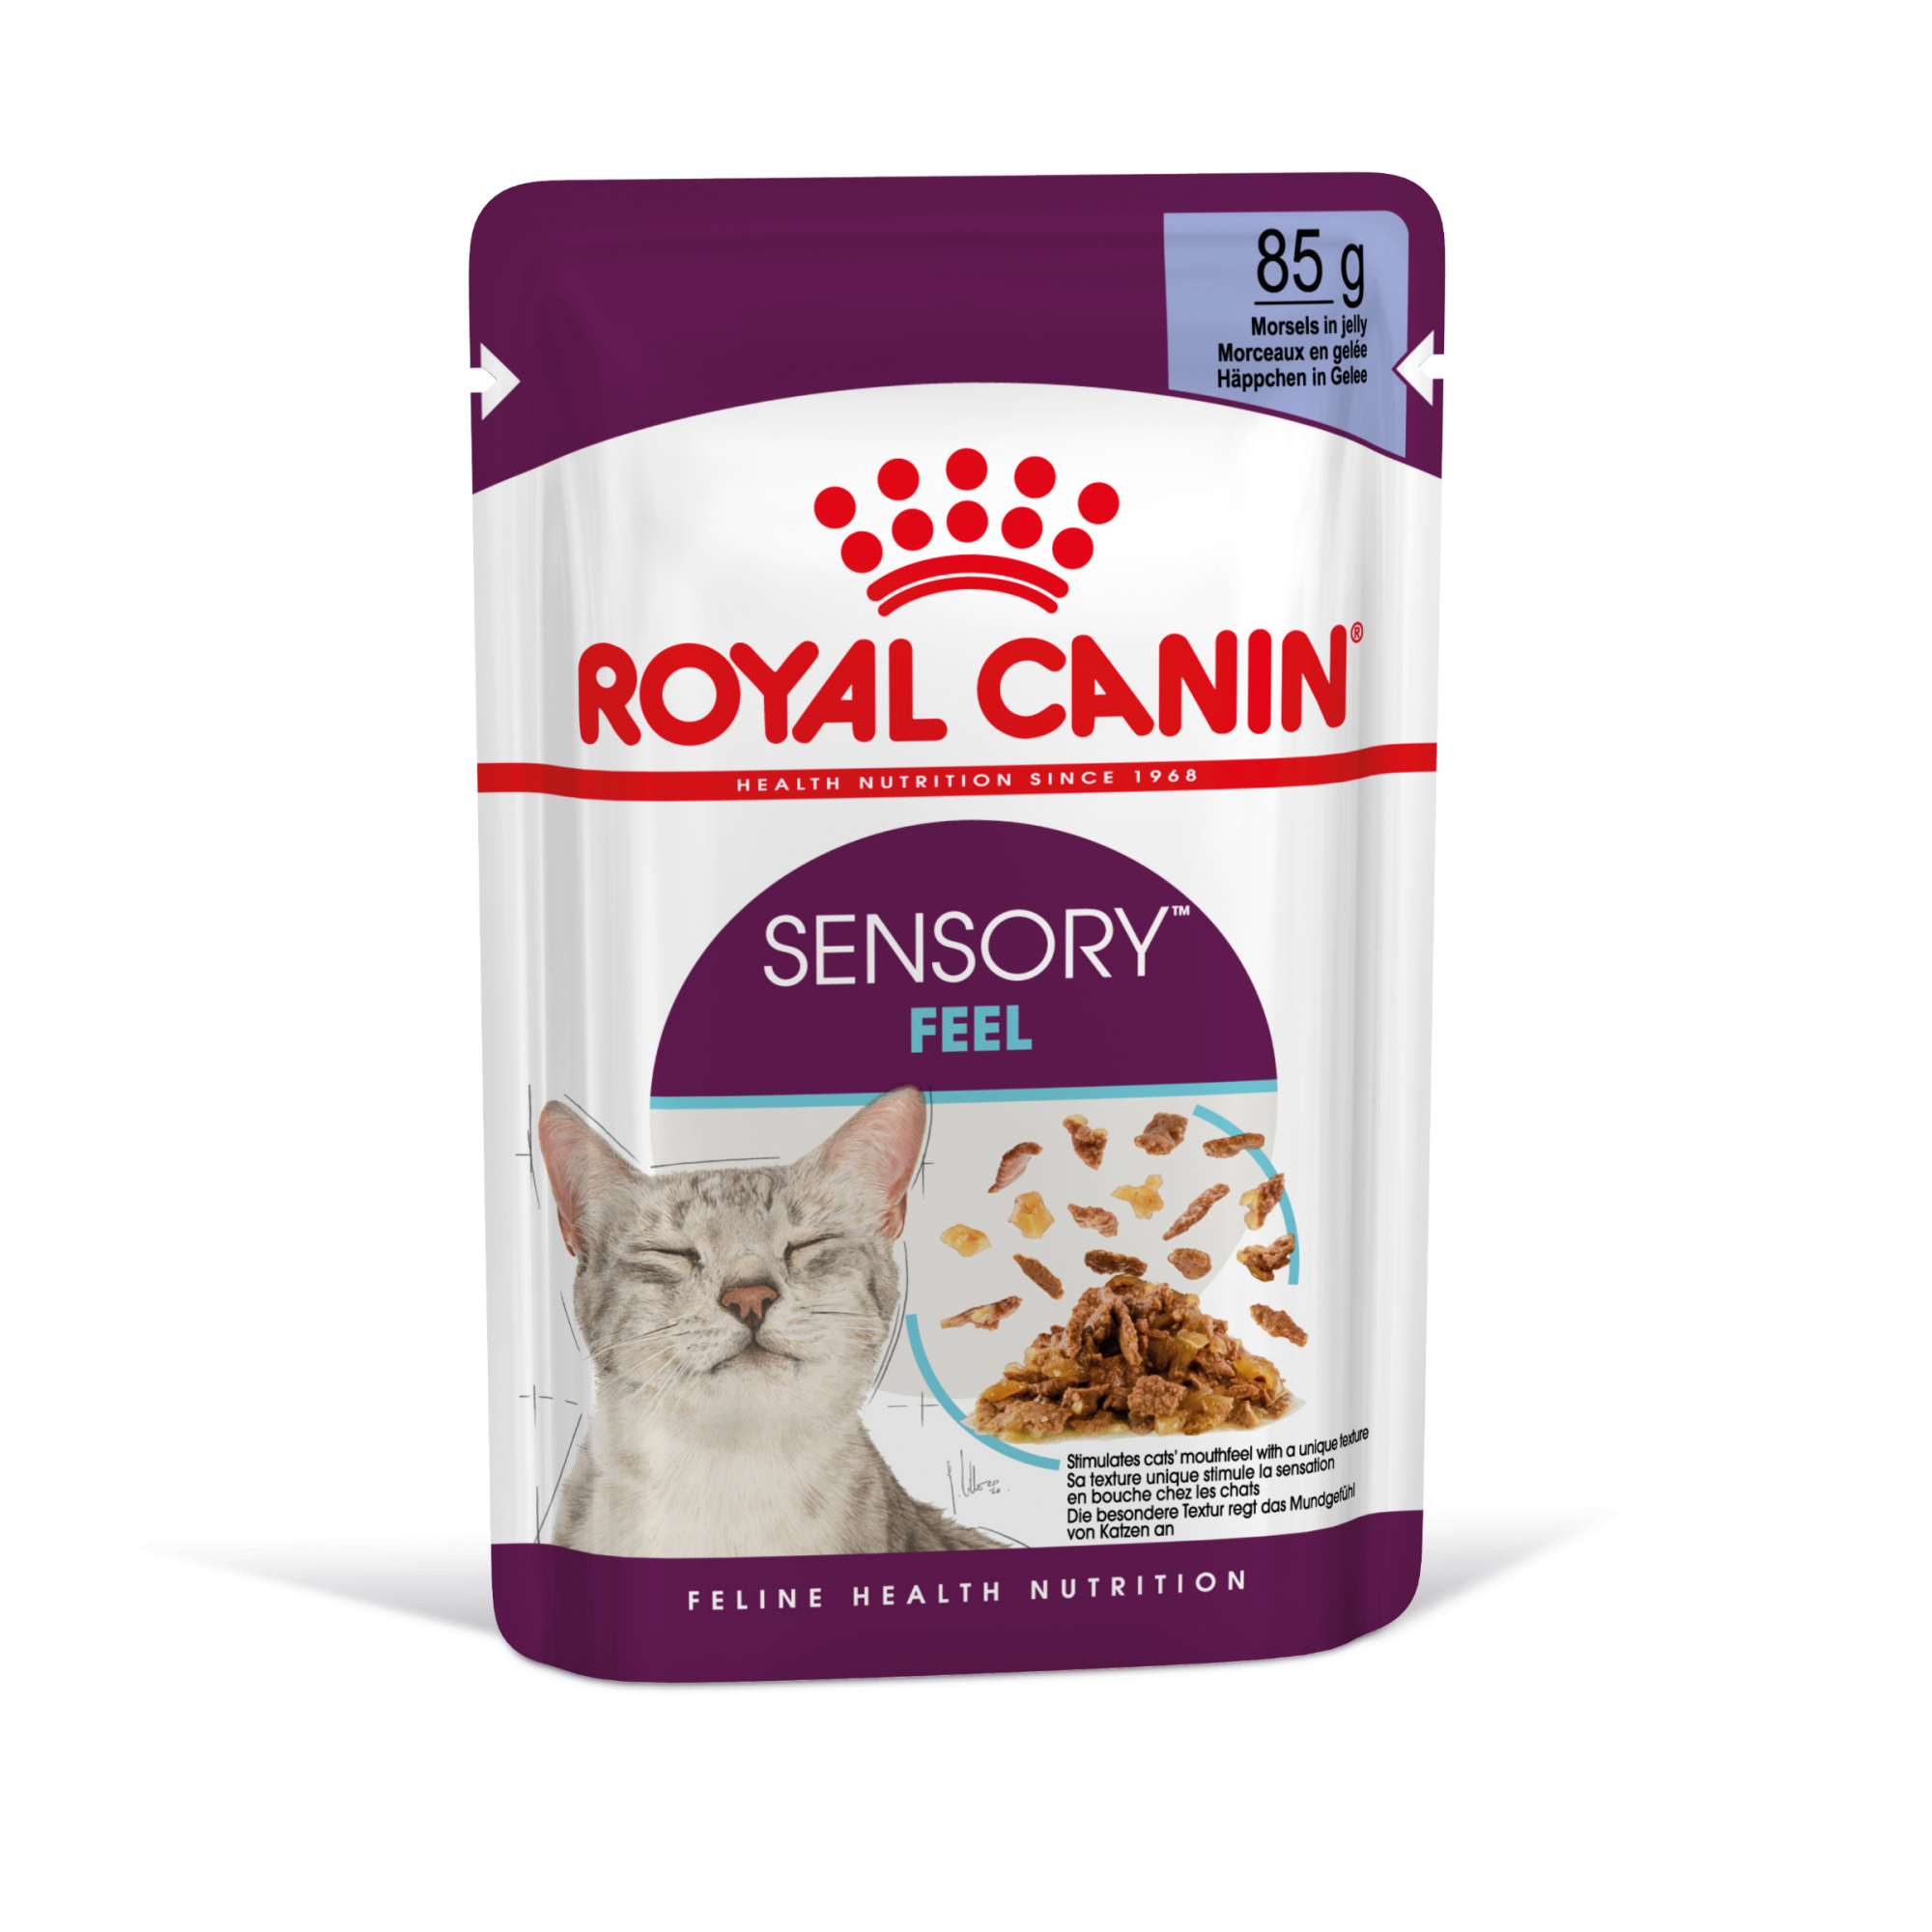 Royal Canin Sensory Feel pâtée gelée pour chat 